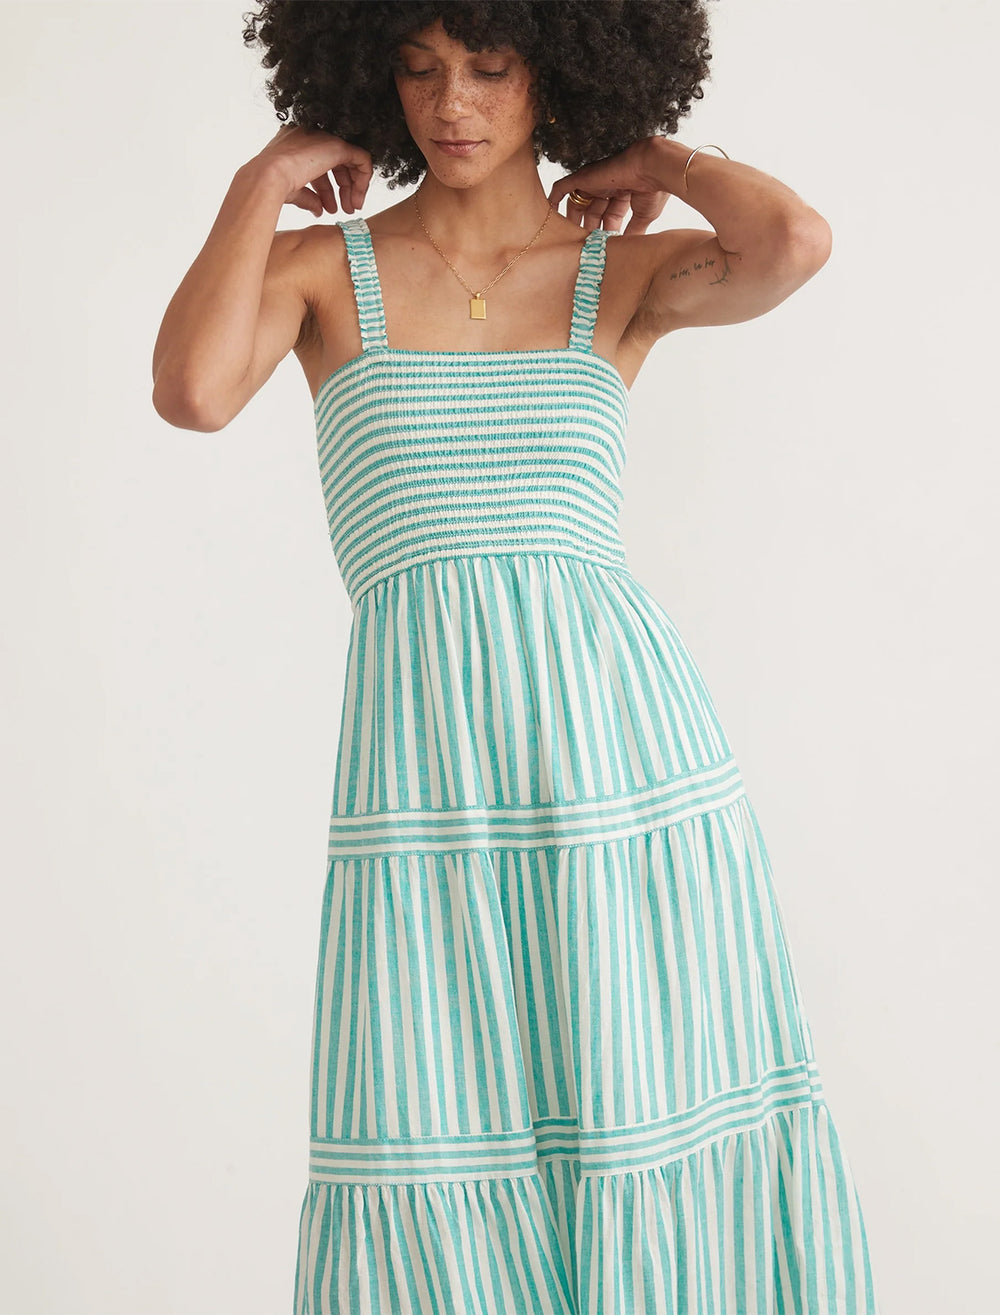 Model wearing Marine Layer's selene maxi dress in slushy stripe.